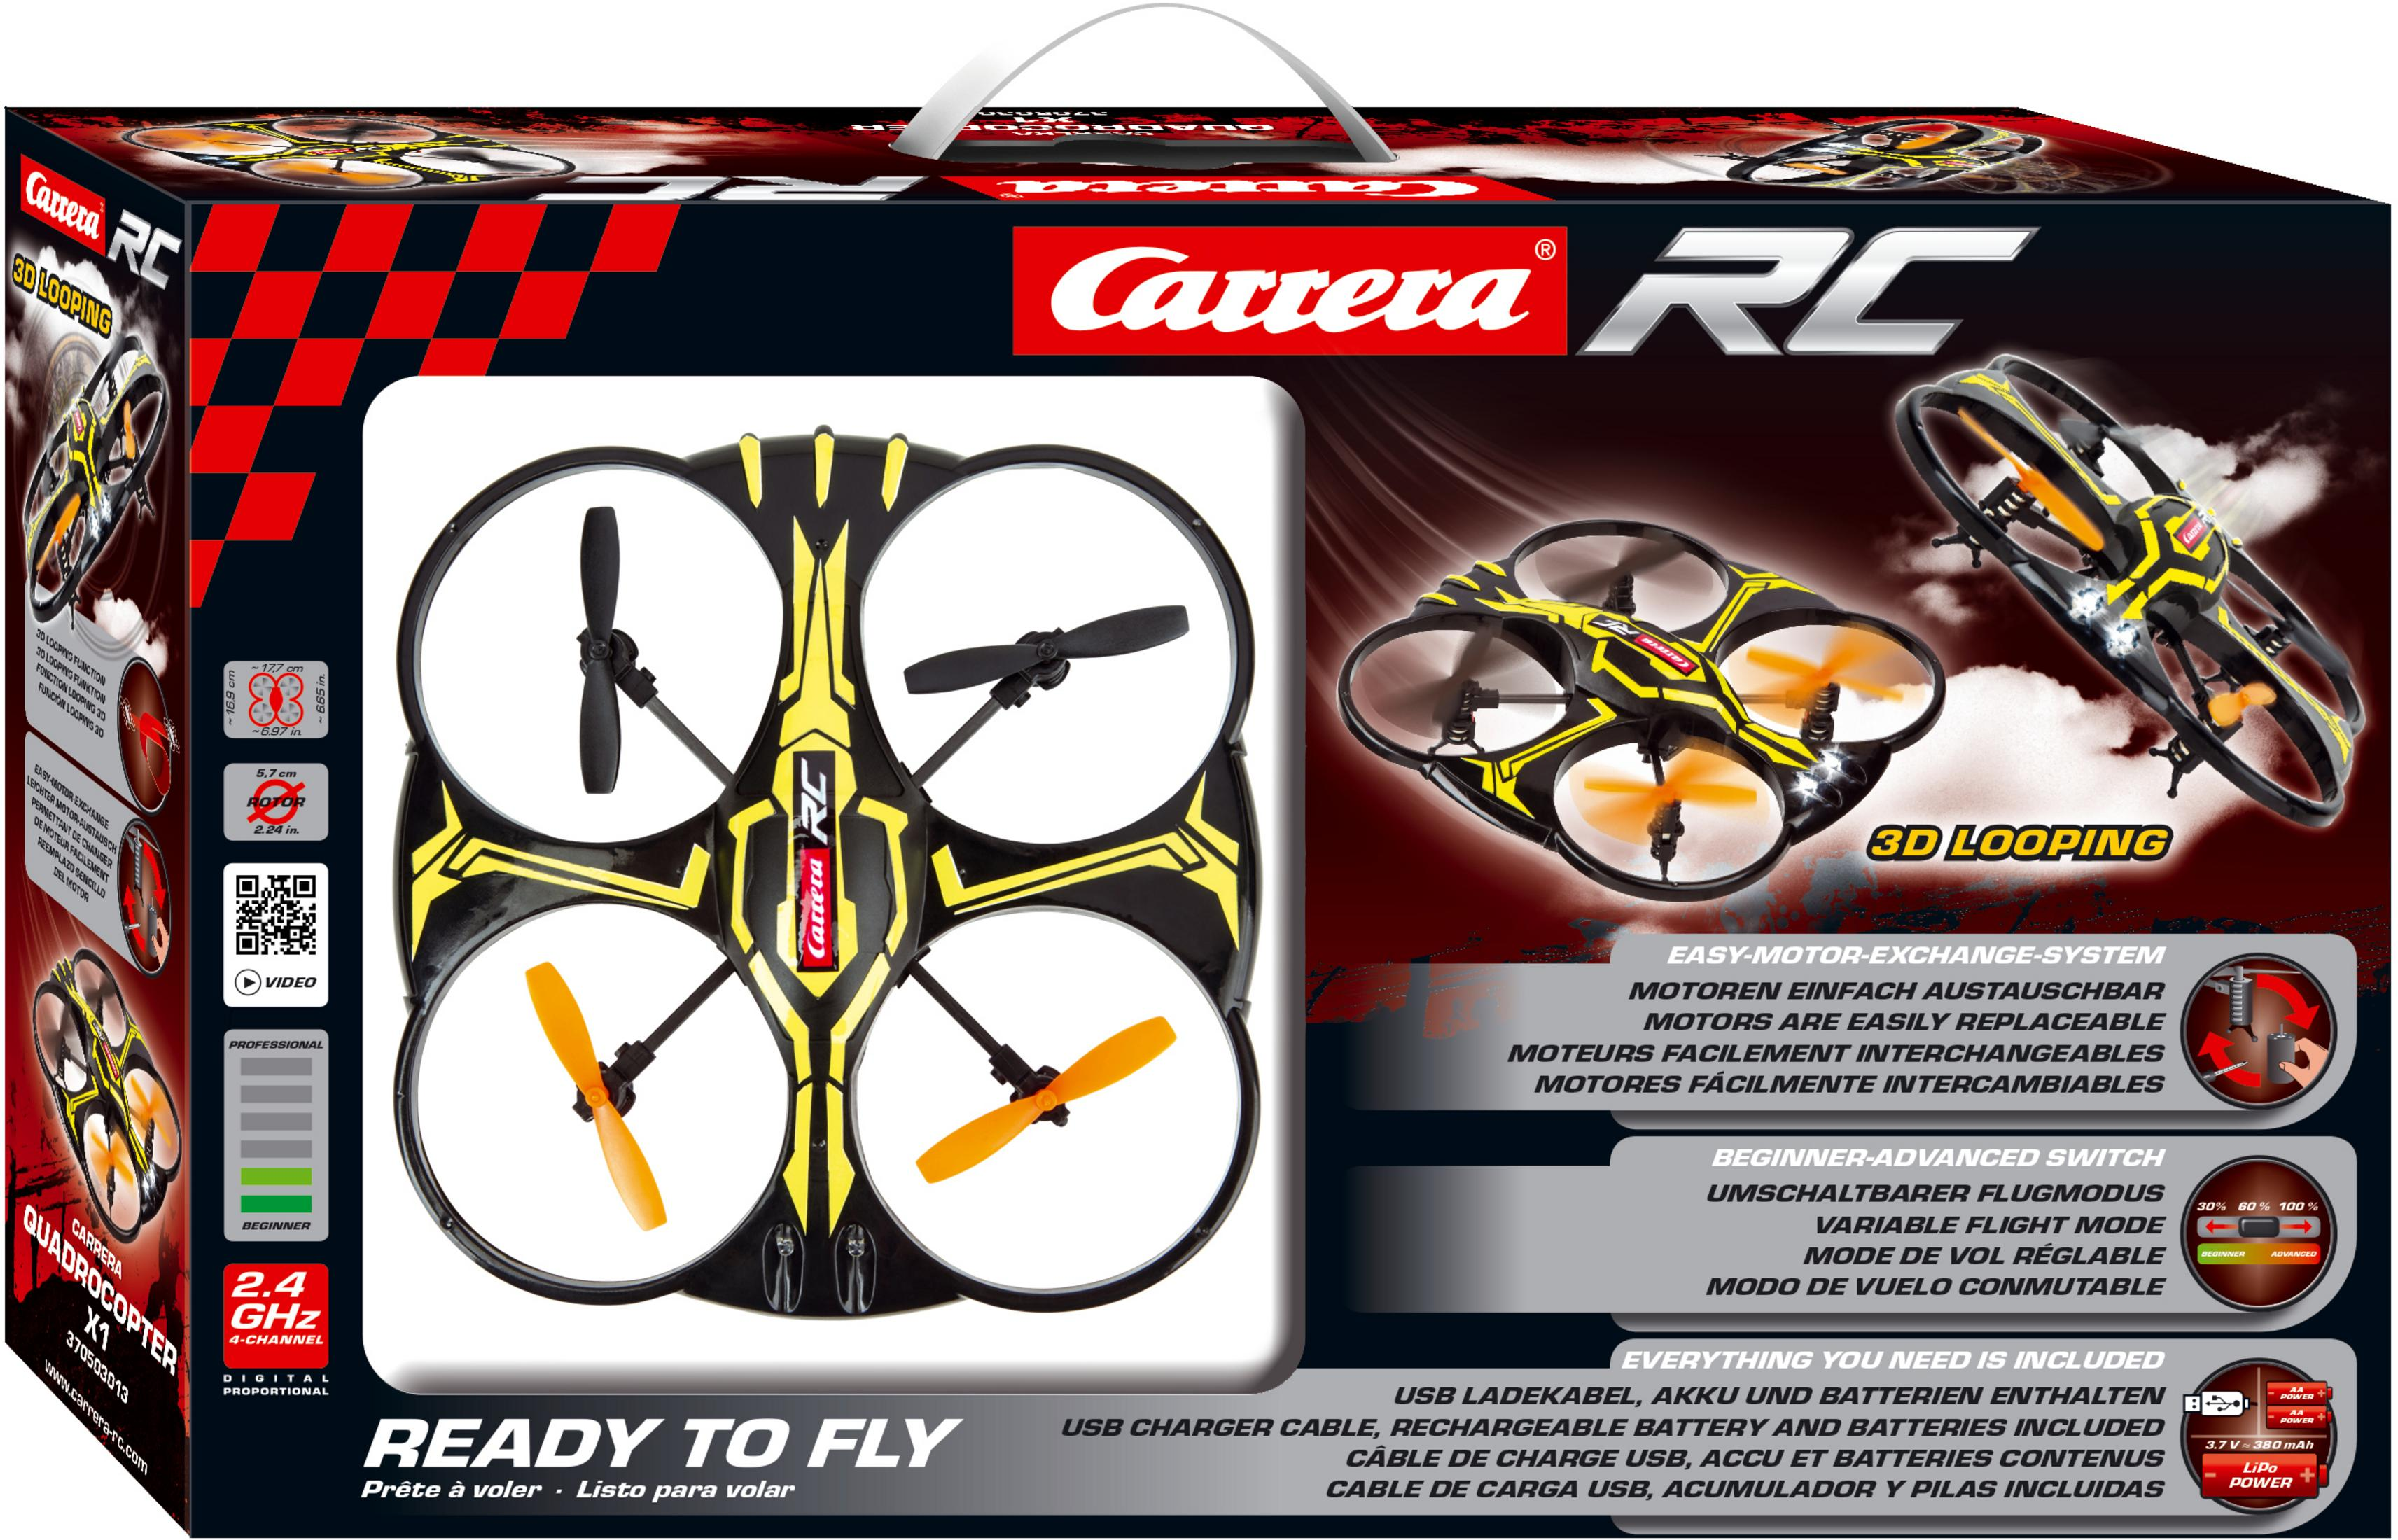 Quadrocopter, Schwarz/Gelb 370503013X 2,4GHZ CARRERA QUADROCOPTER X1